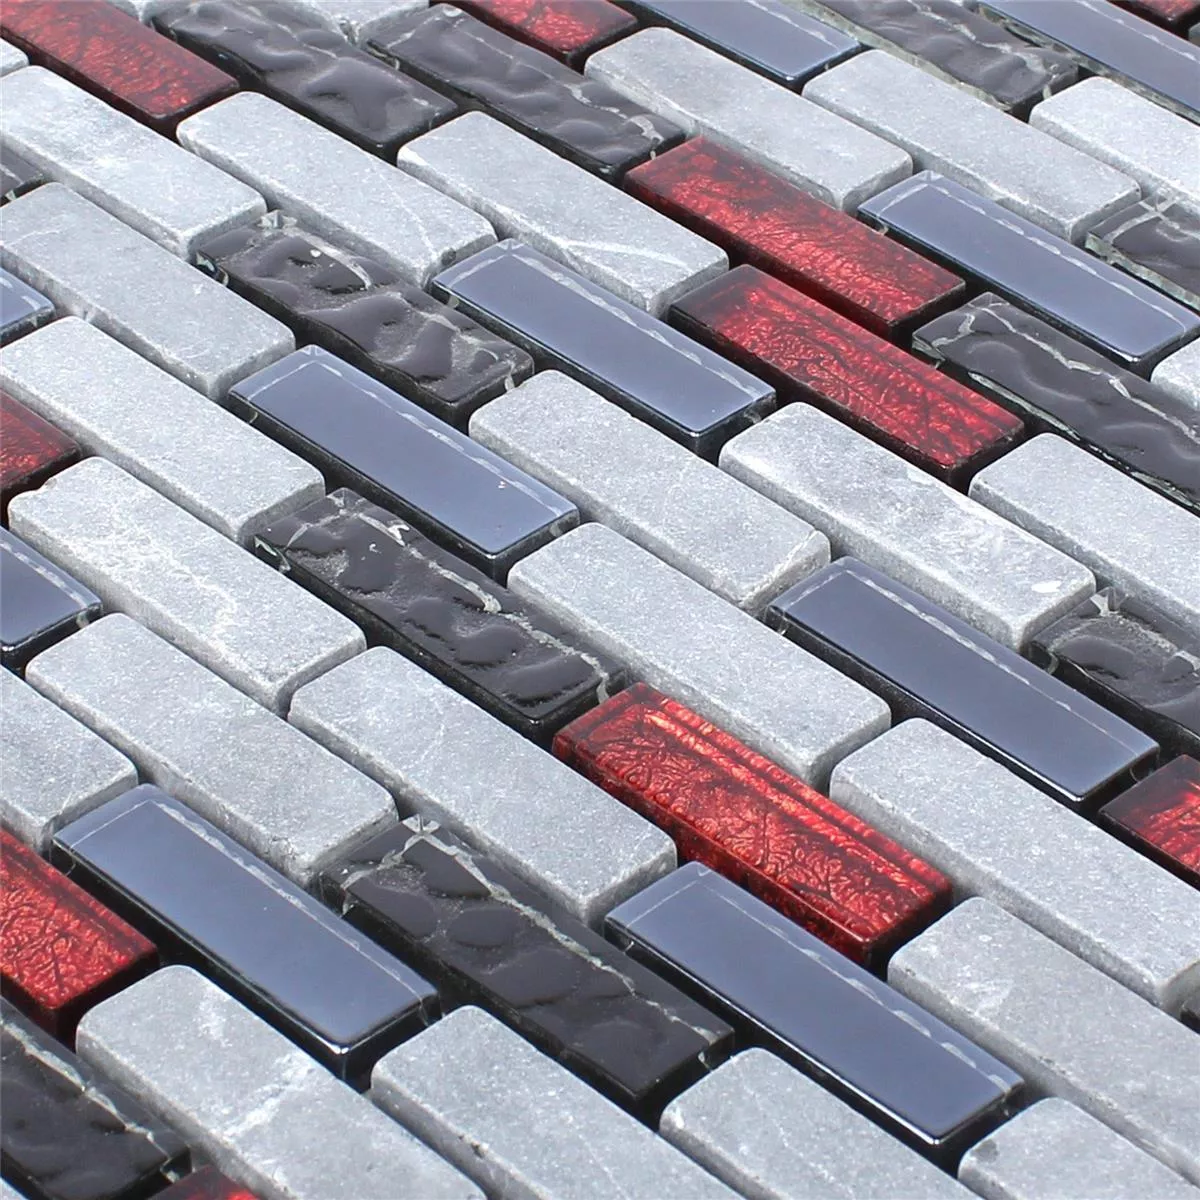 Glass Mosaic Natural Stone Tiles Marley Black Red Grey